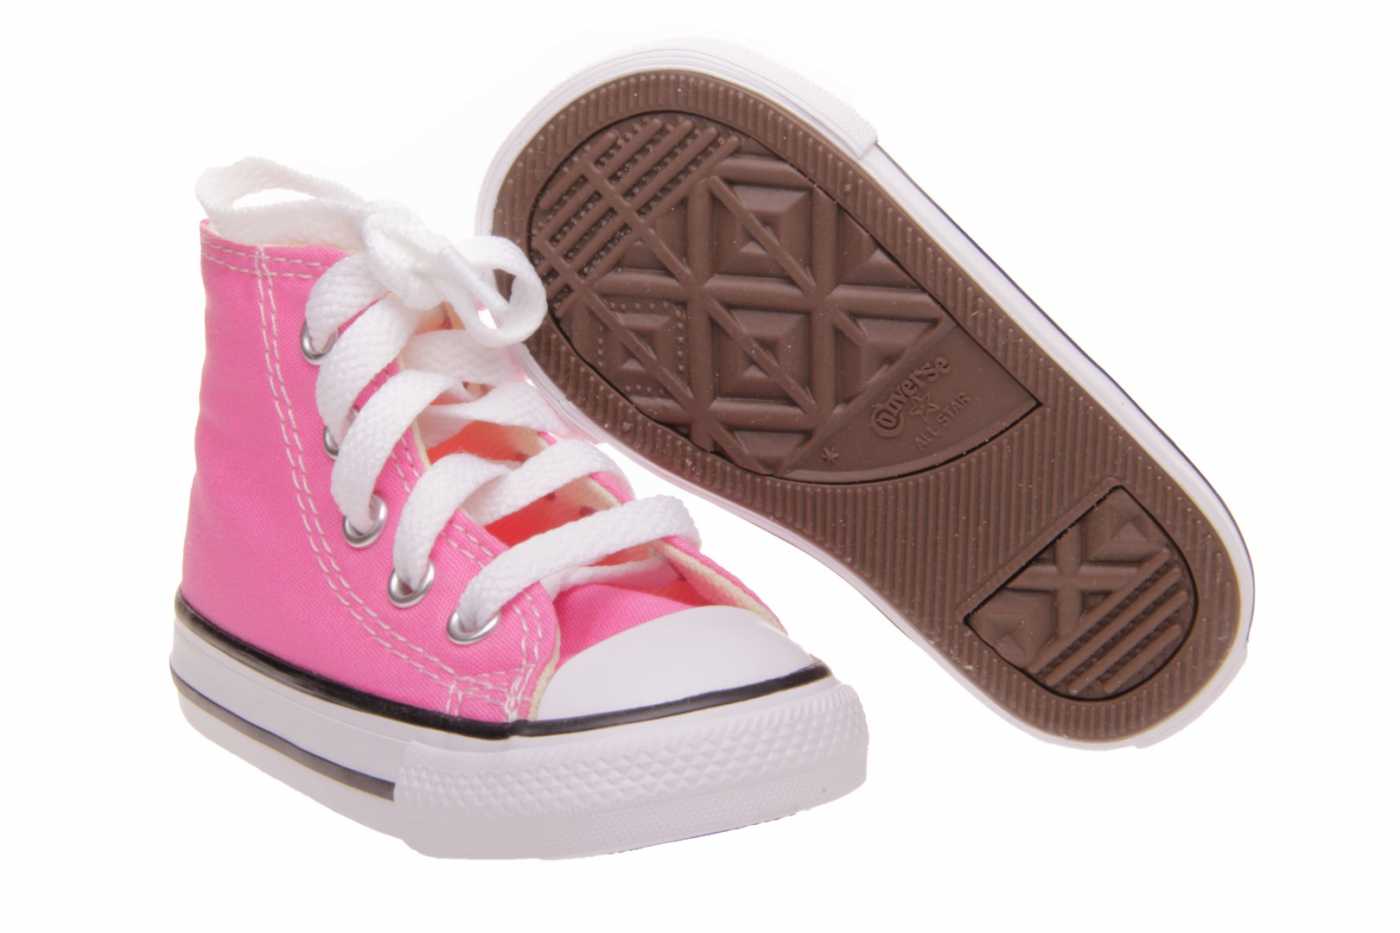 Comprar zapato CONVERSE para NIÑA estilo LONA color EMPOLVADO